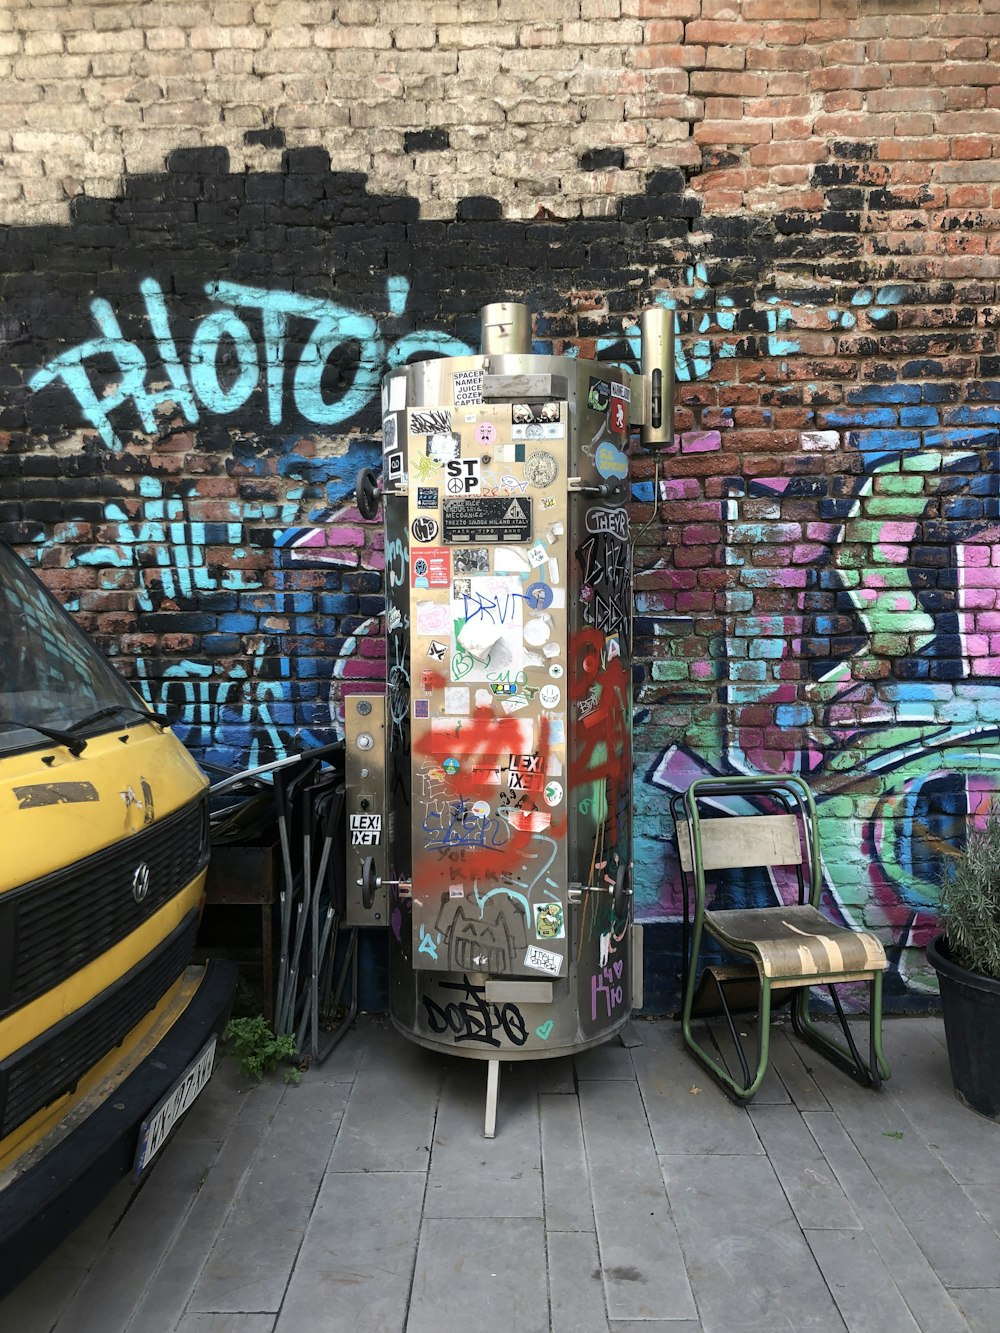 a refrigerator with graffiti on it